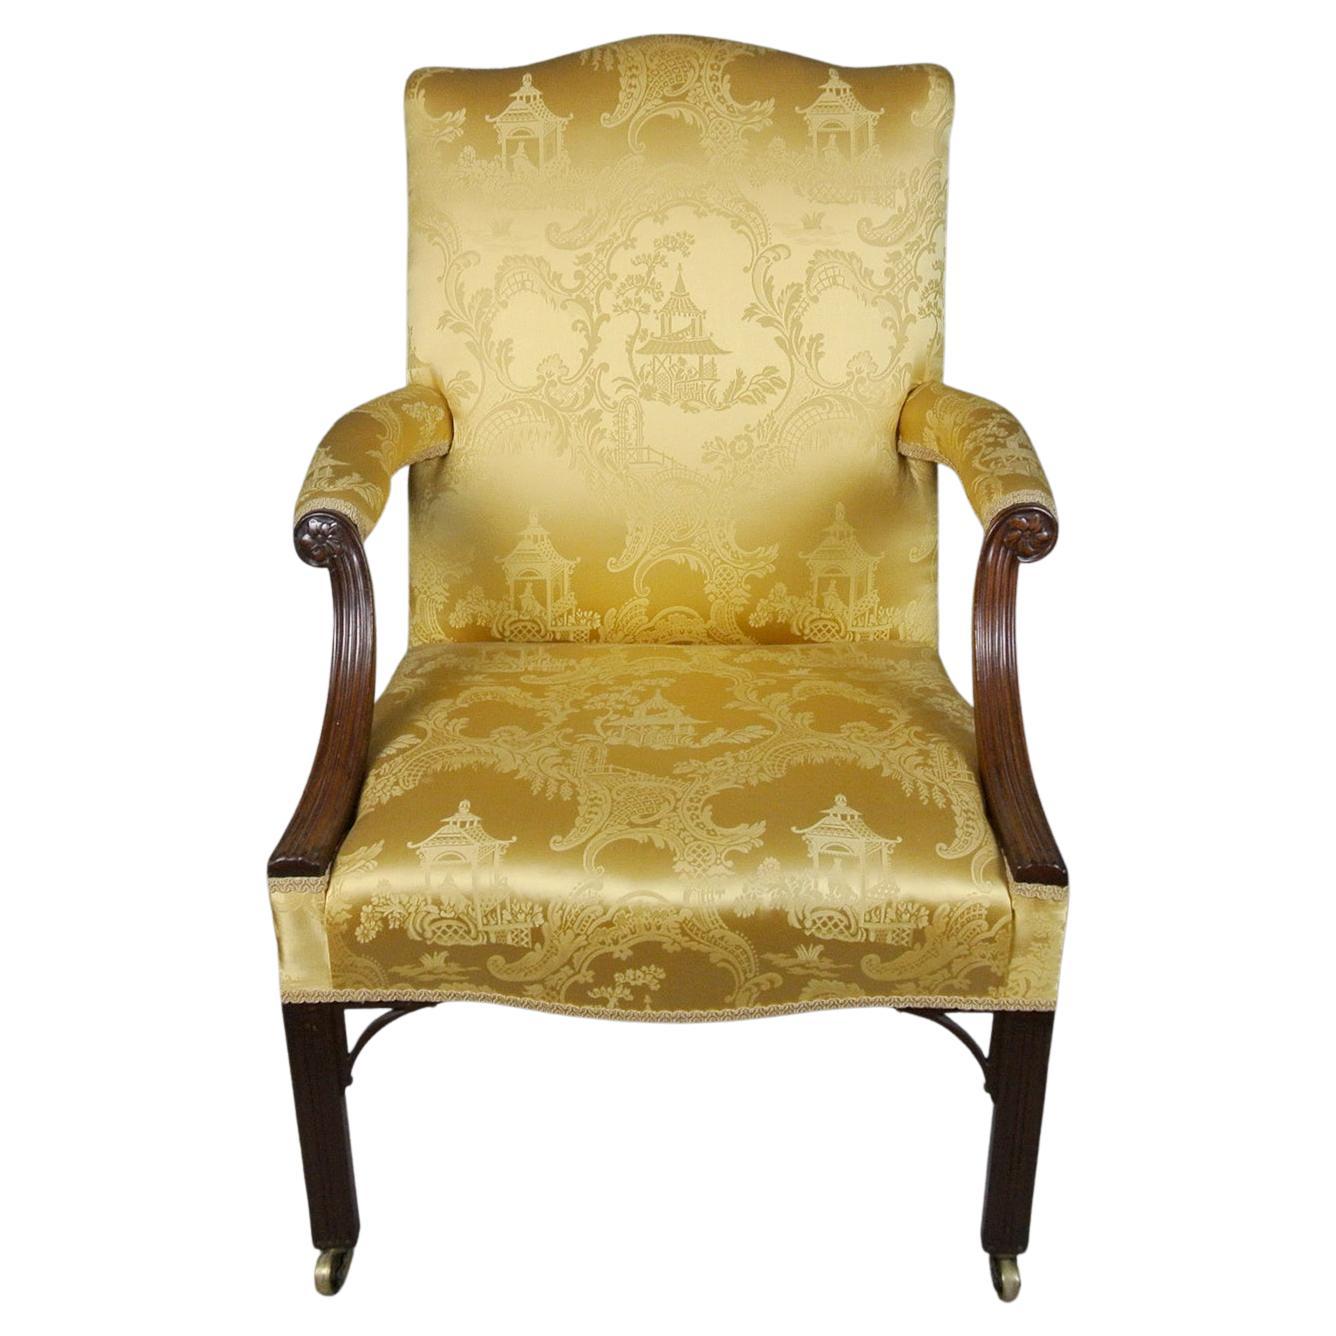 Exemplary George II Mahogany Gainsborough Chair c.1750